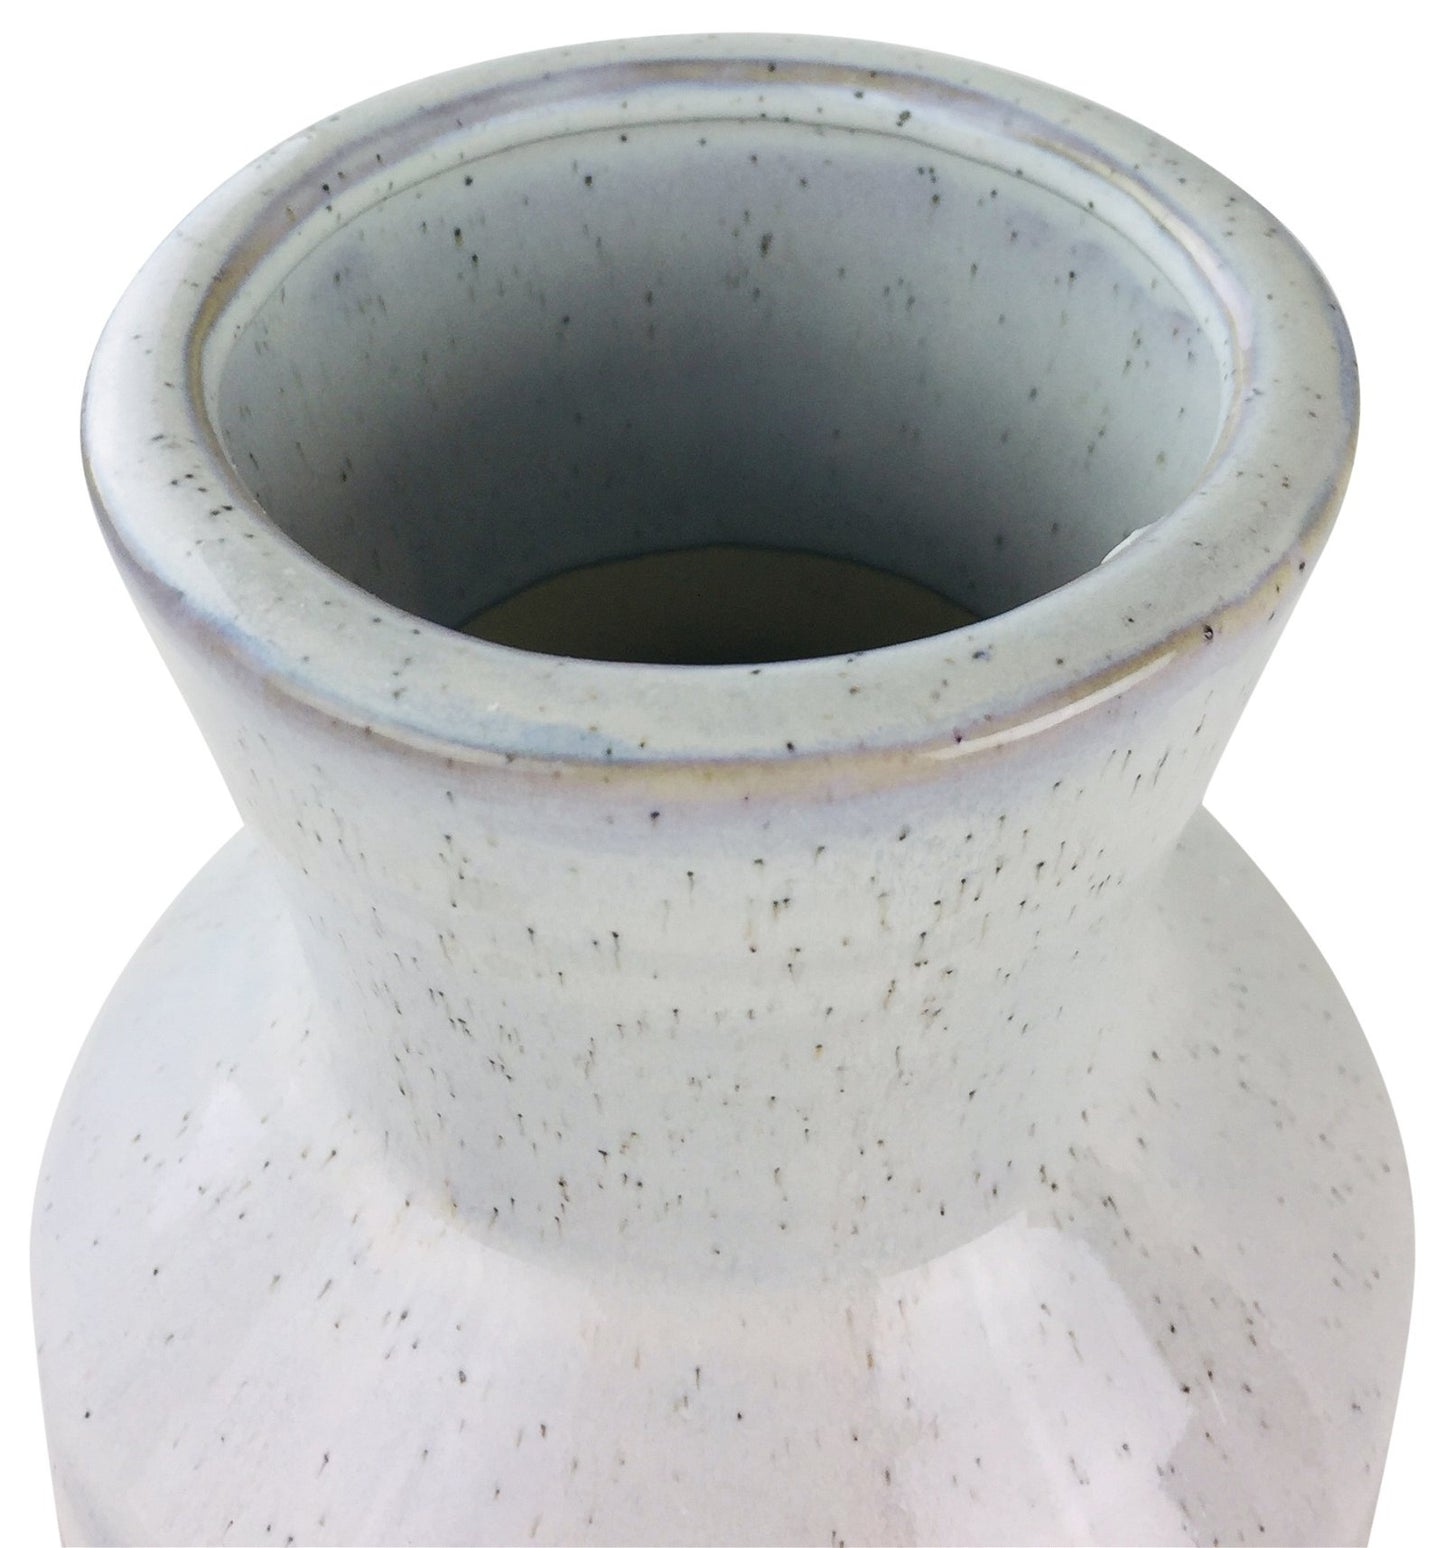 White Herringbone Textured Stoneware Vase 44cm